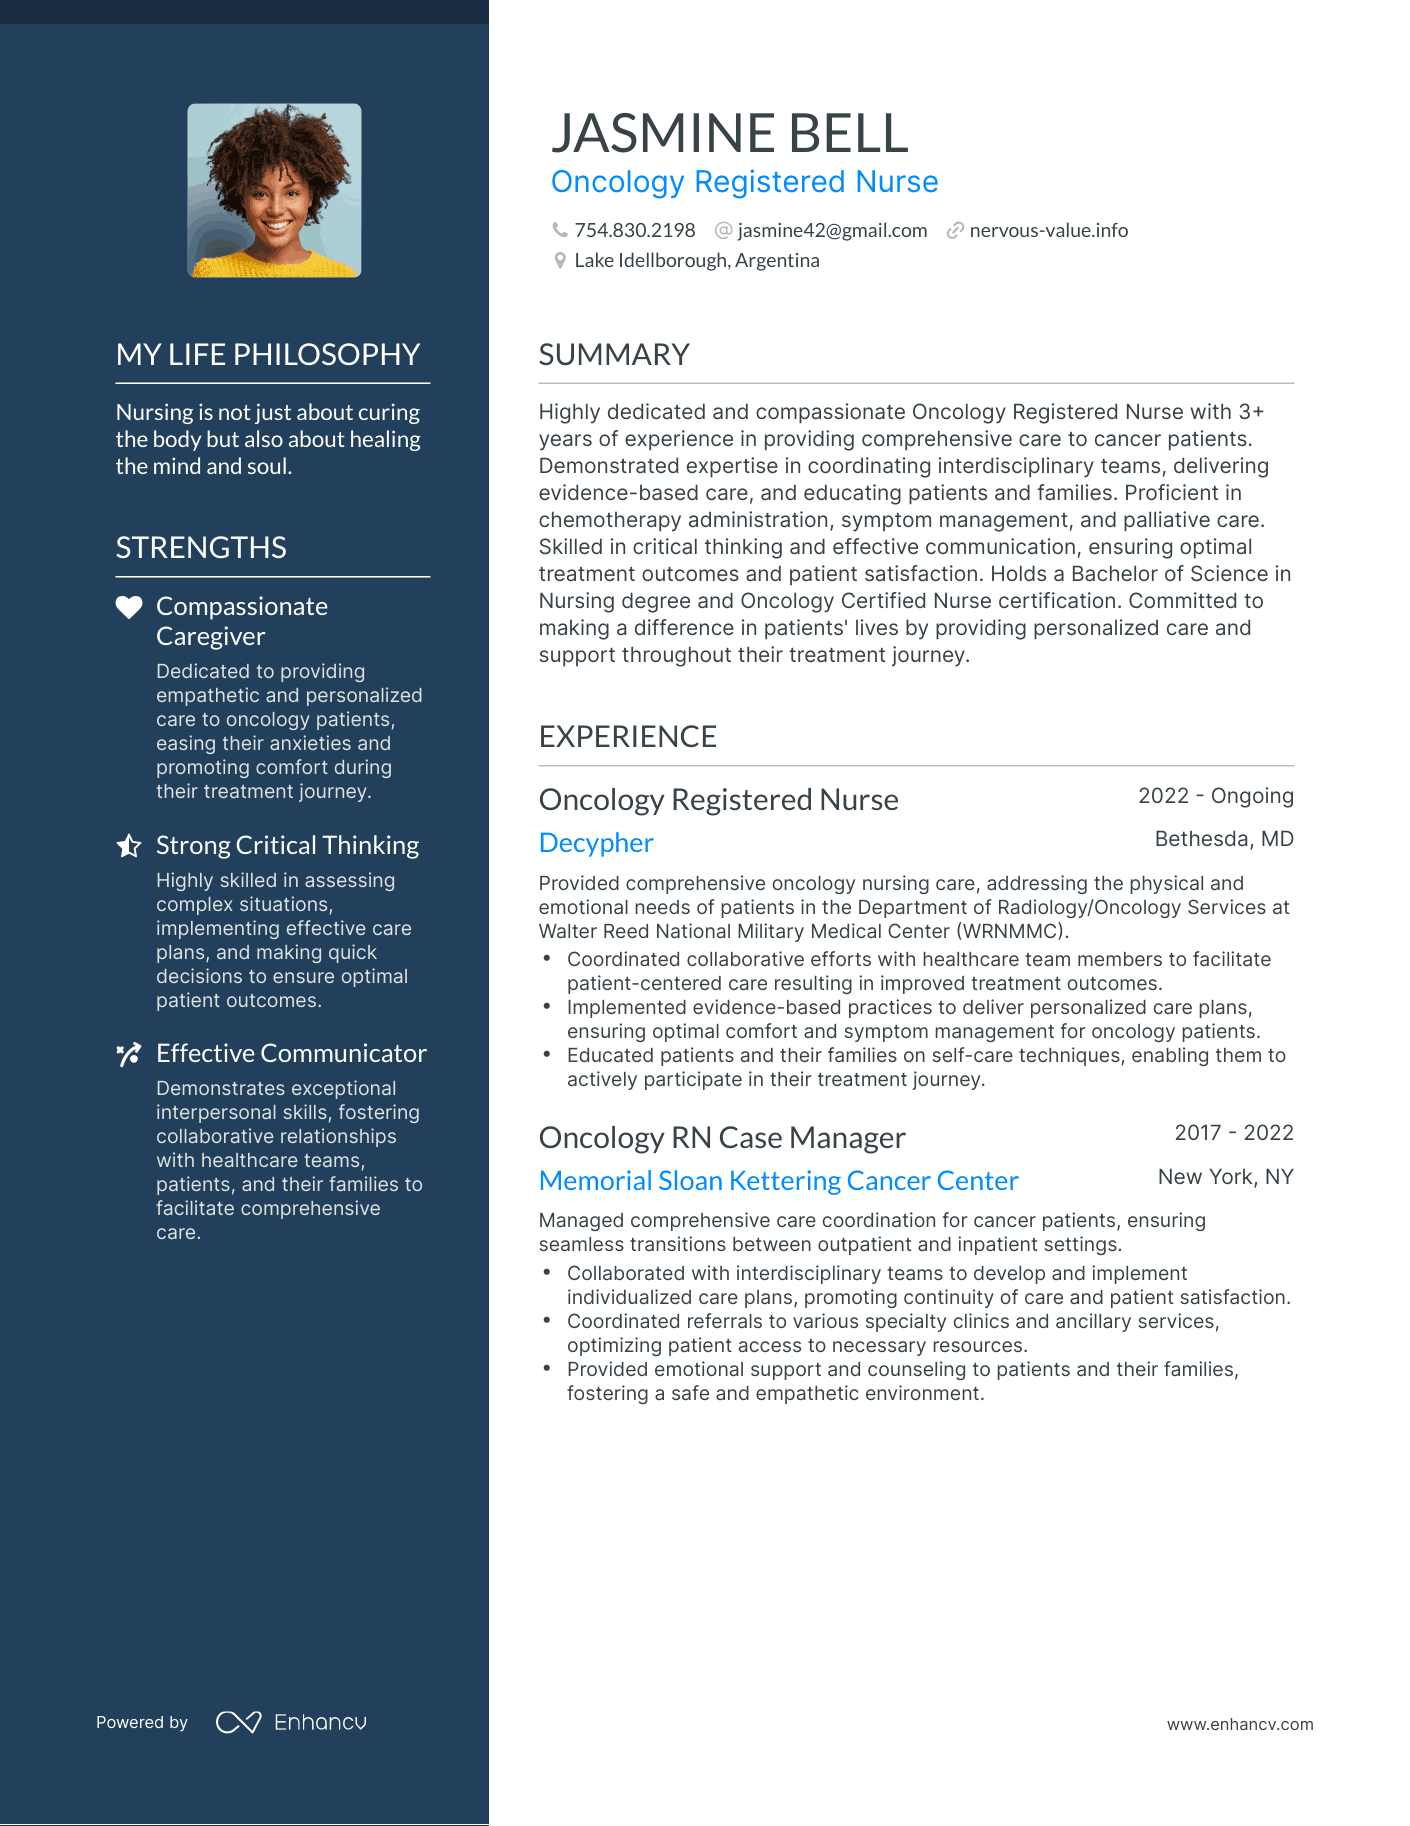 Oncology Registered Nurse resume example